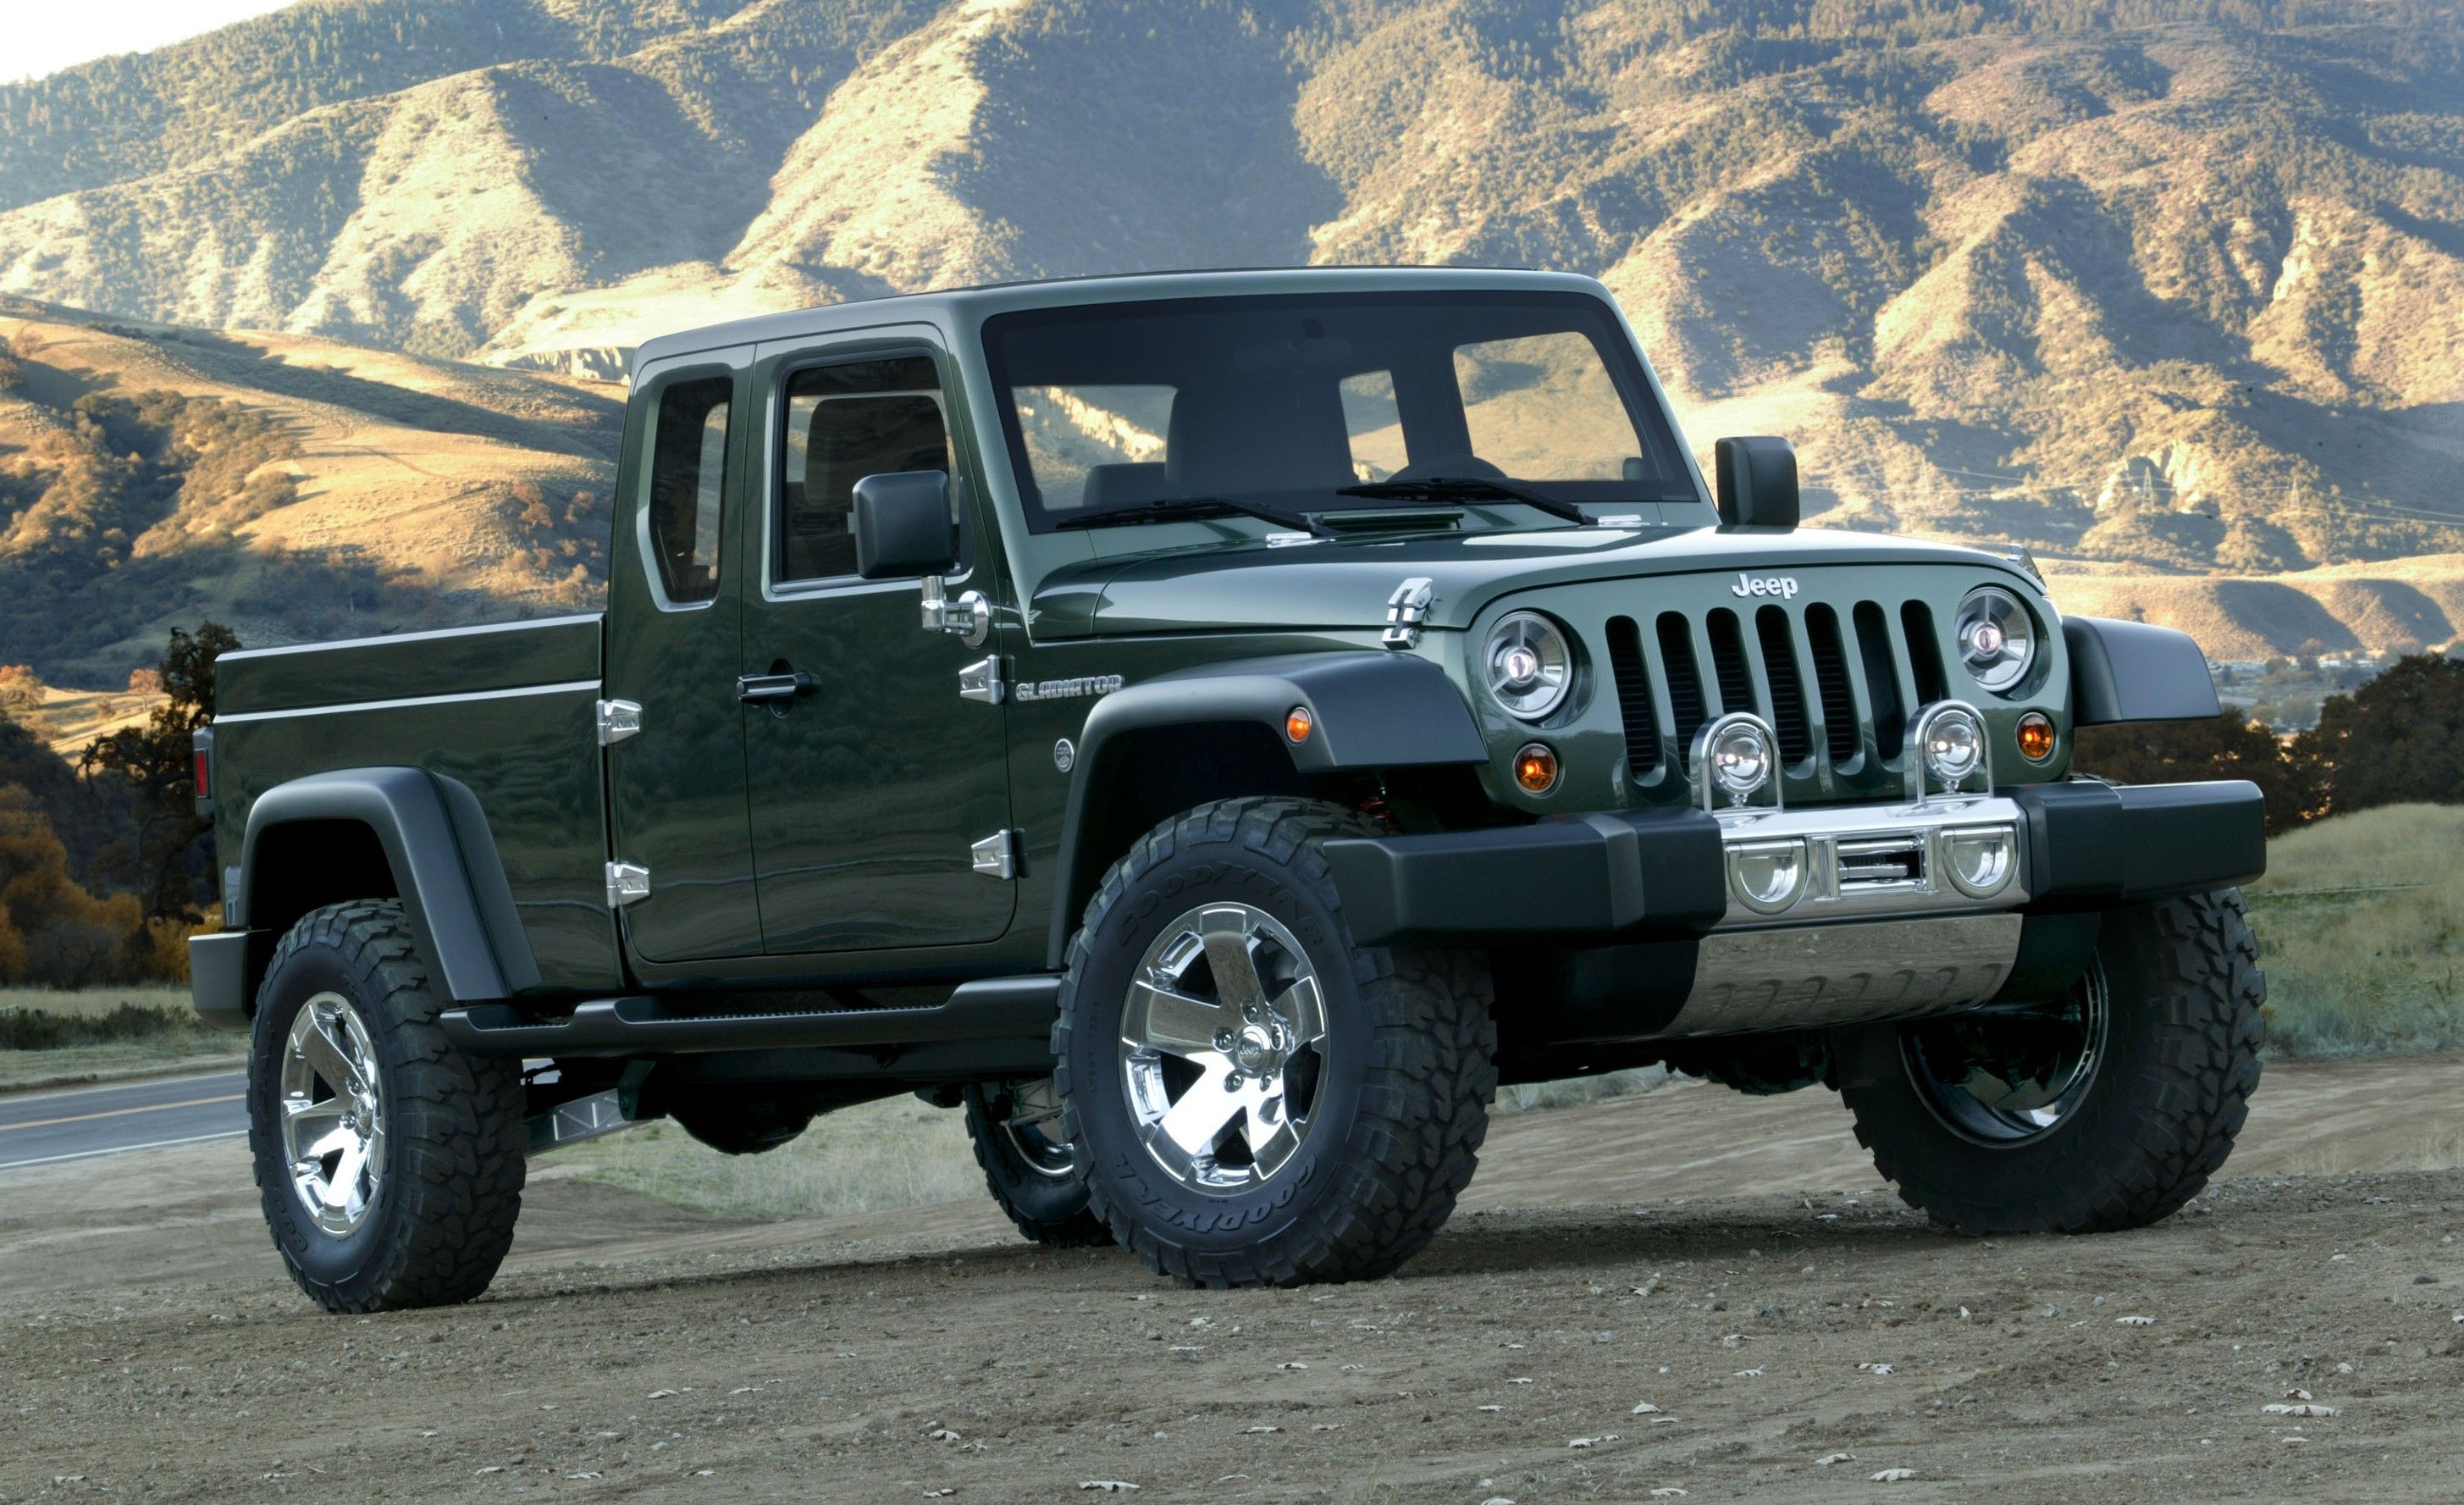 Report: Next-Gen Jeep Wrangler Getting Diesel, Hybrid, and Truck Versions